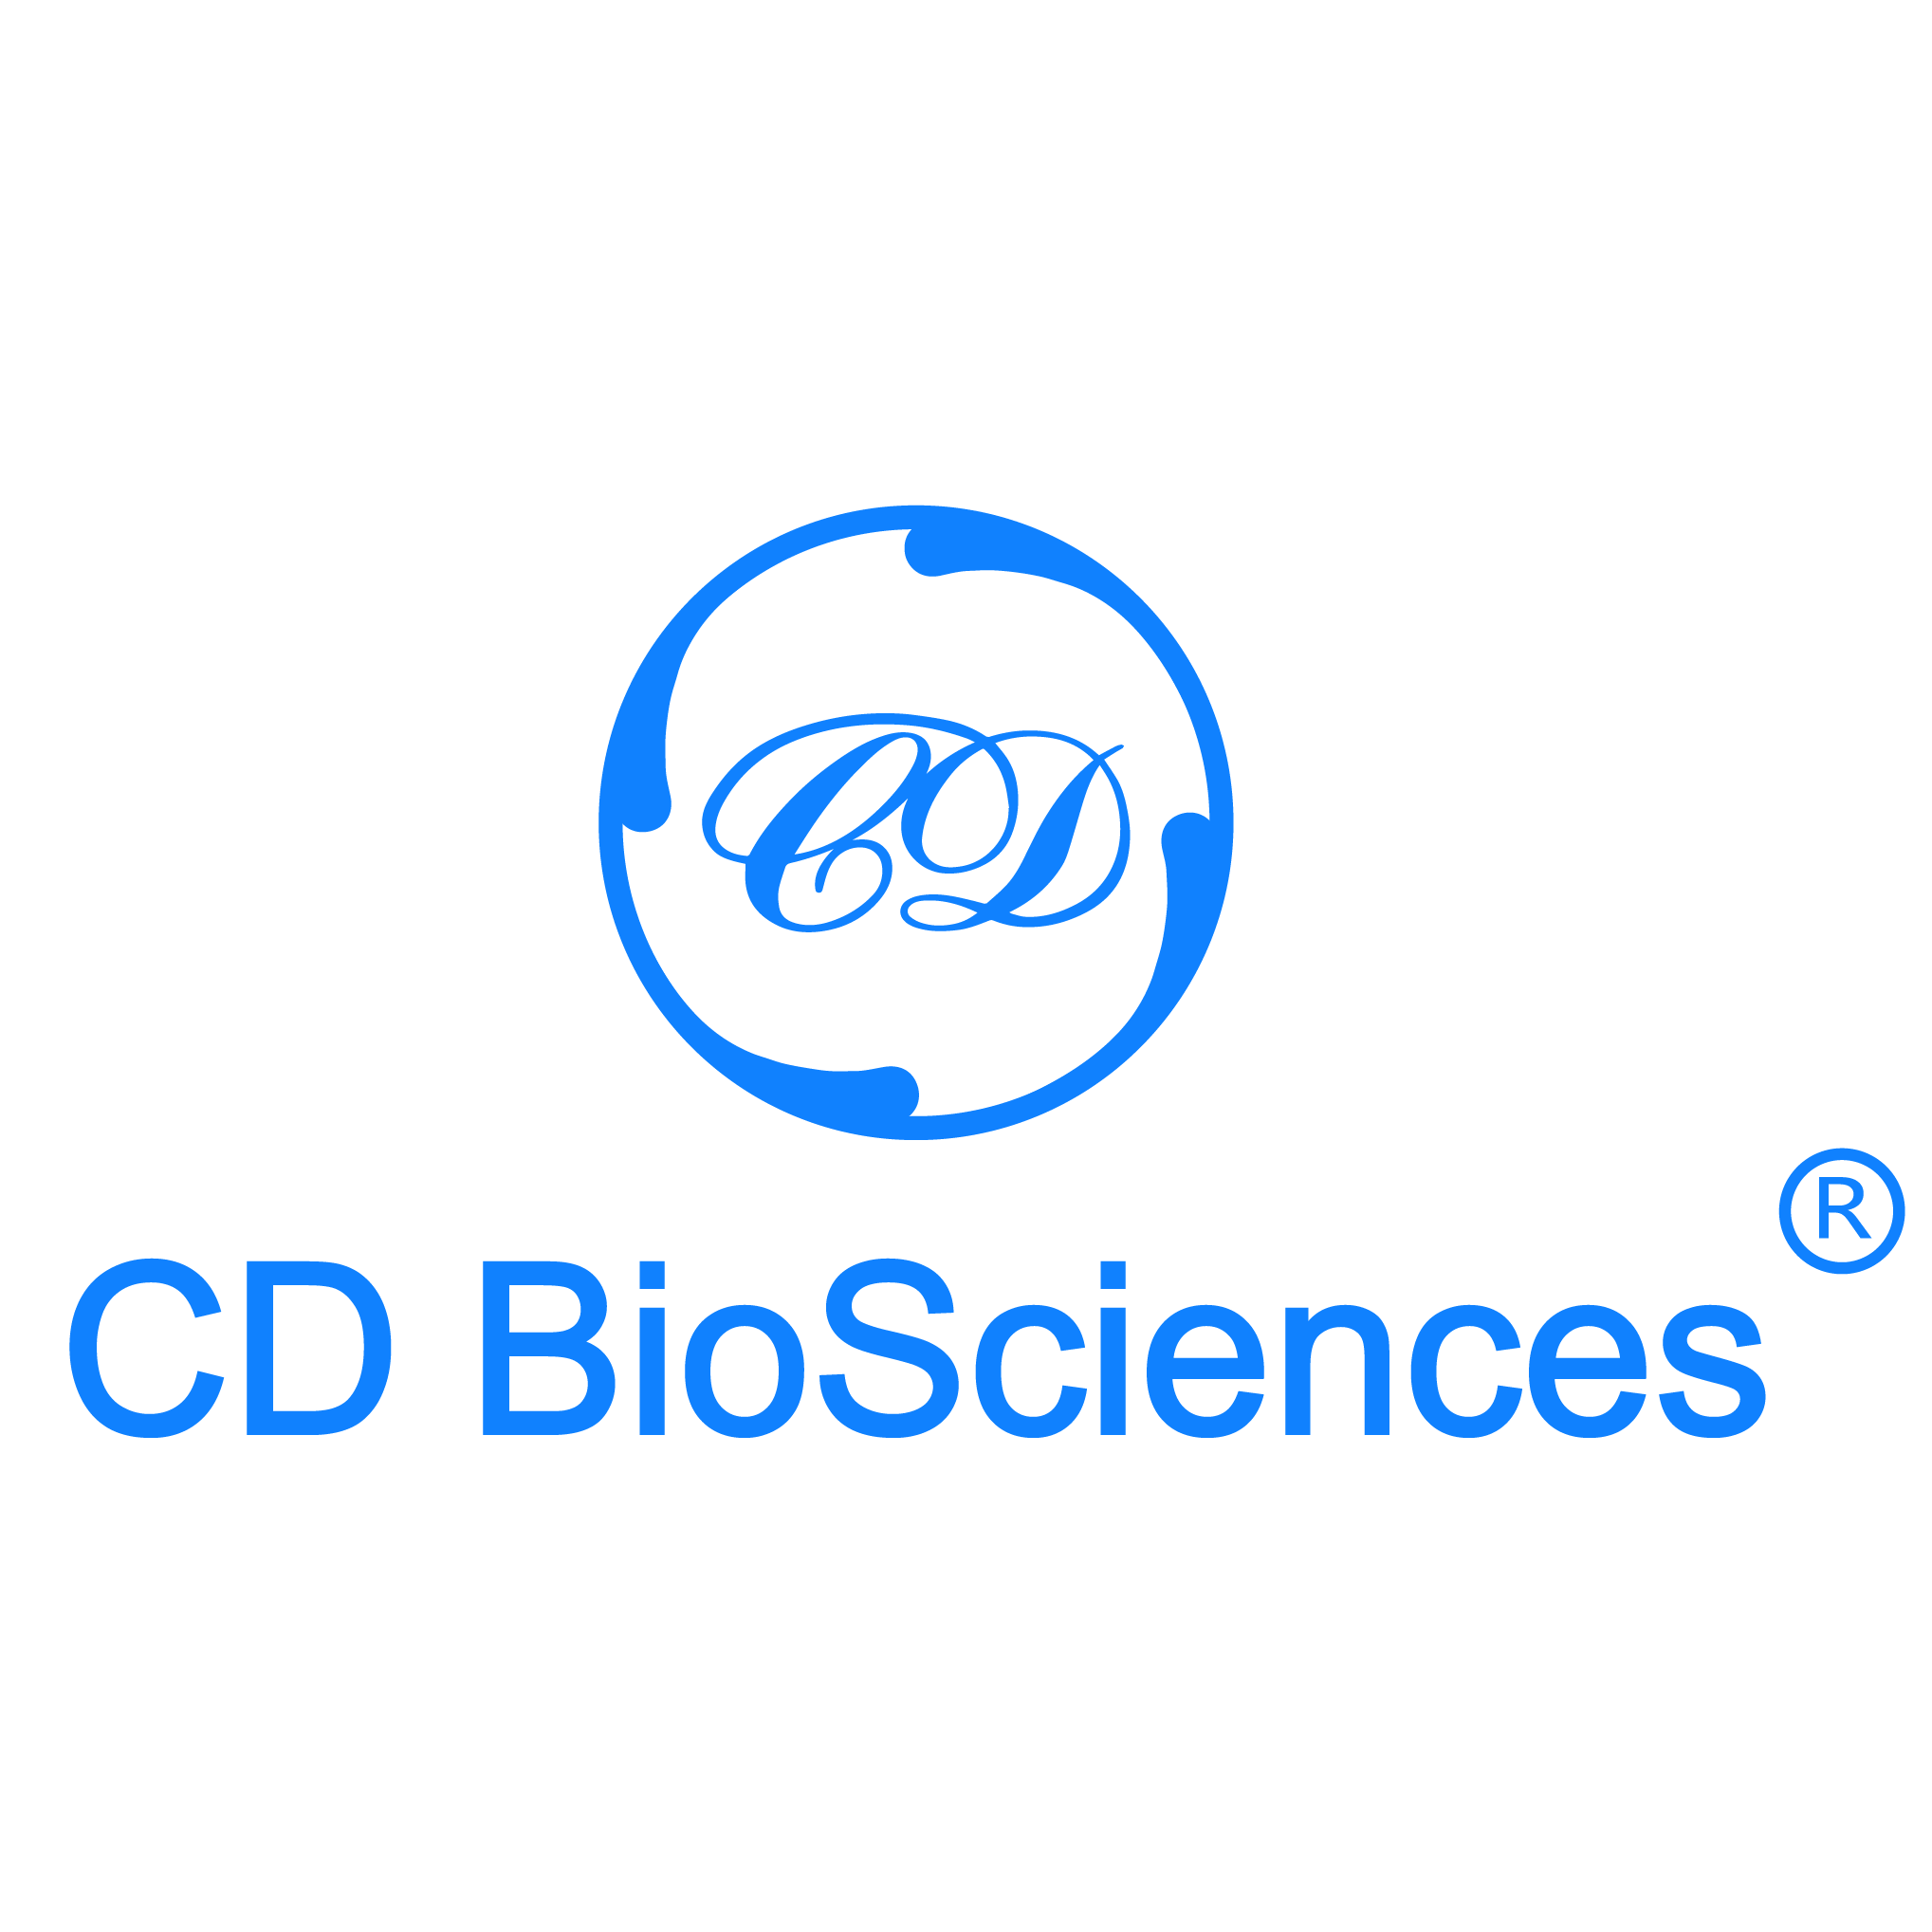 CD BioSciences logo